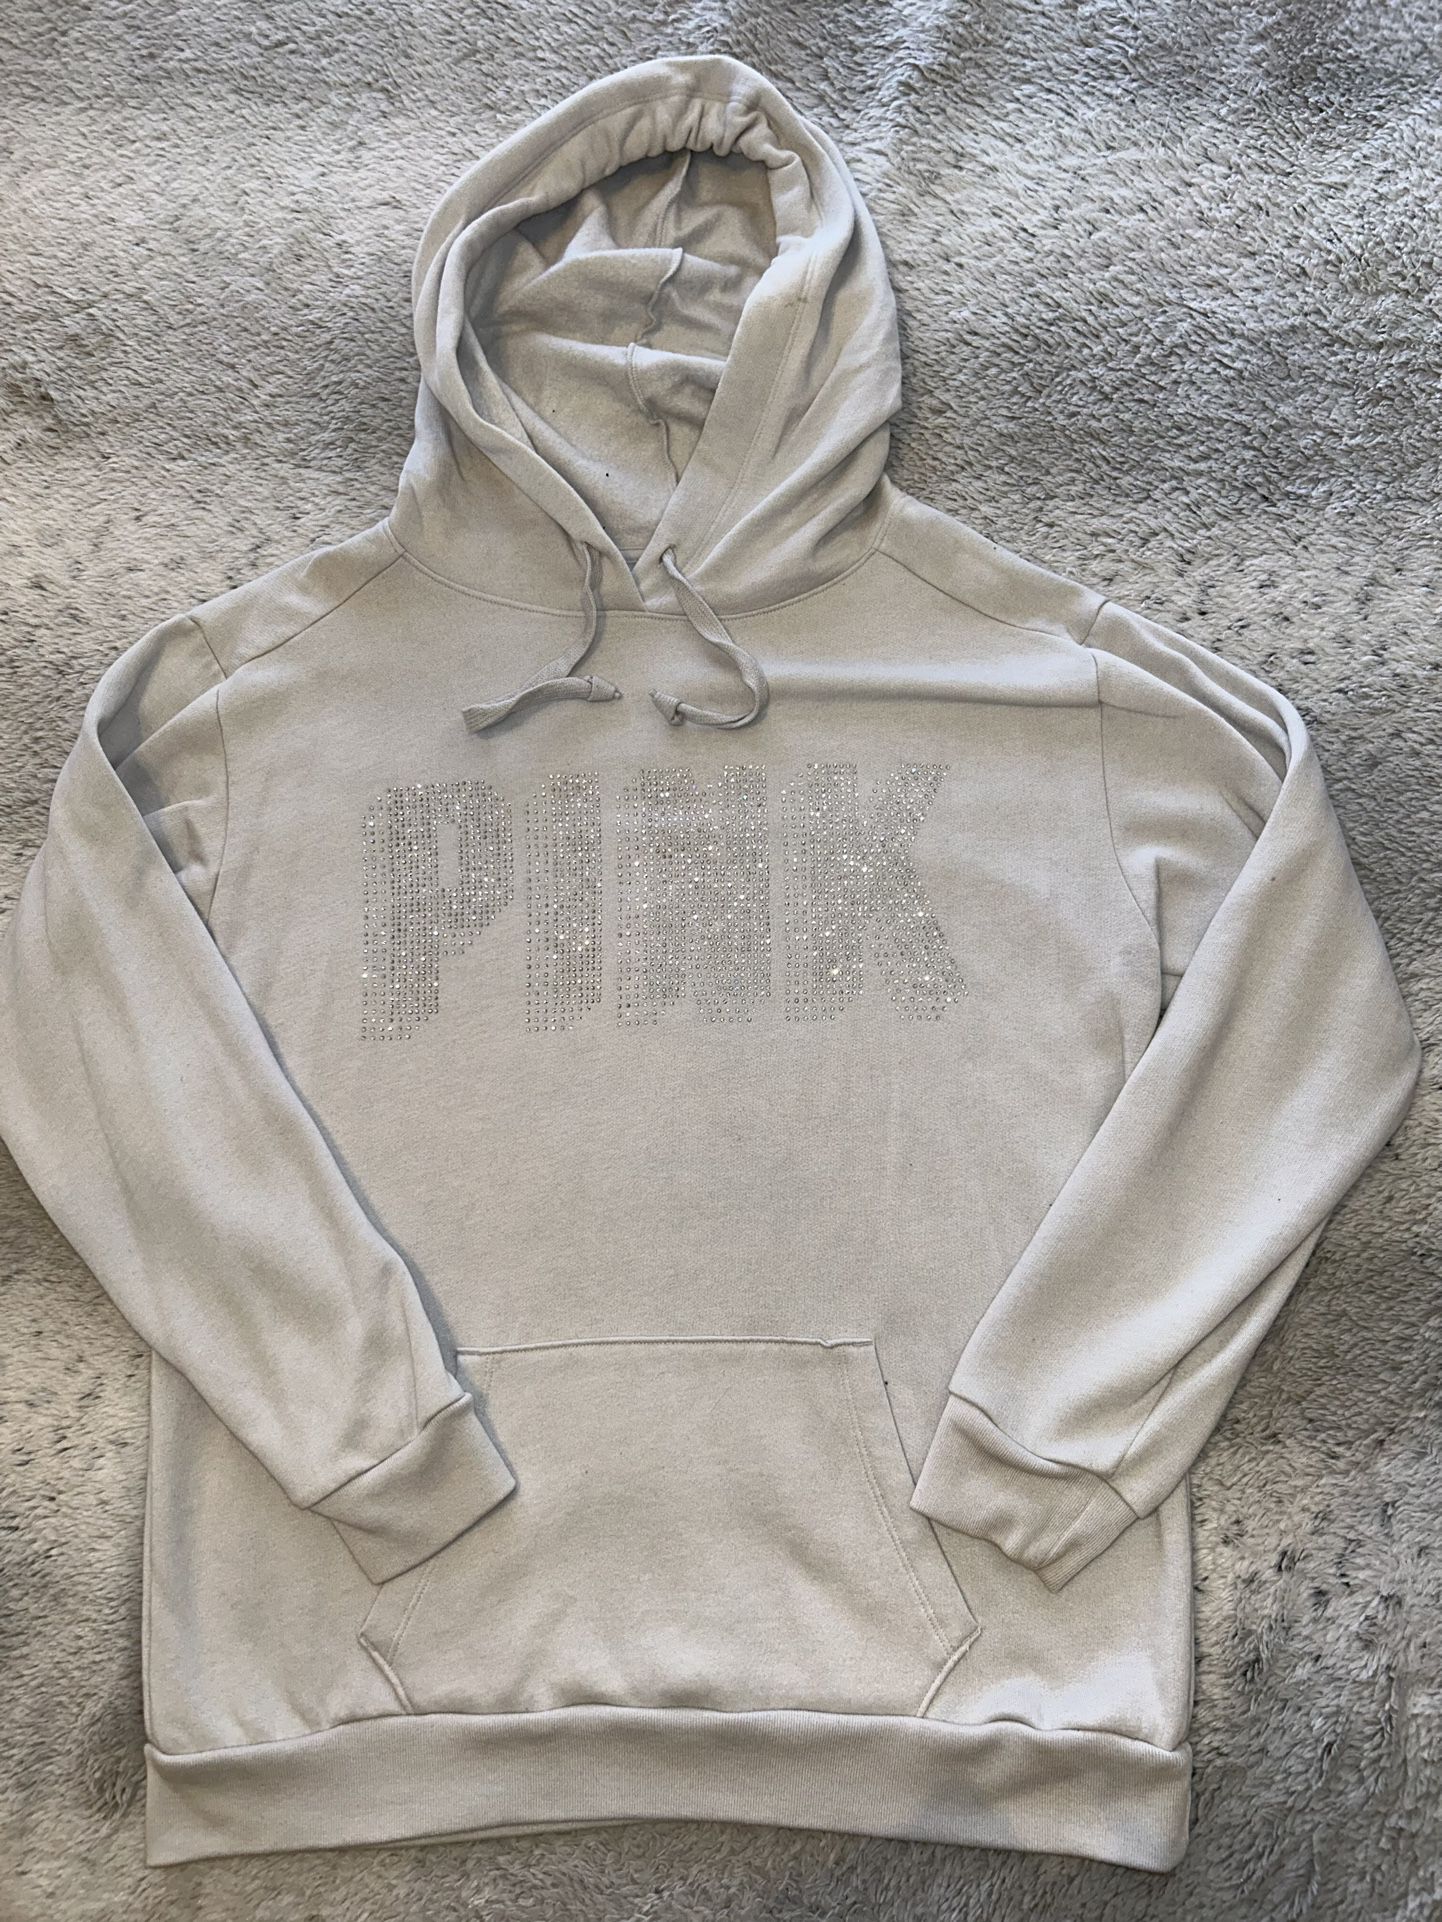 VS PINK rhinestone hoodie size Medium